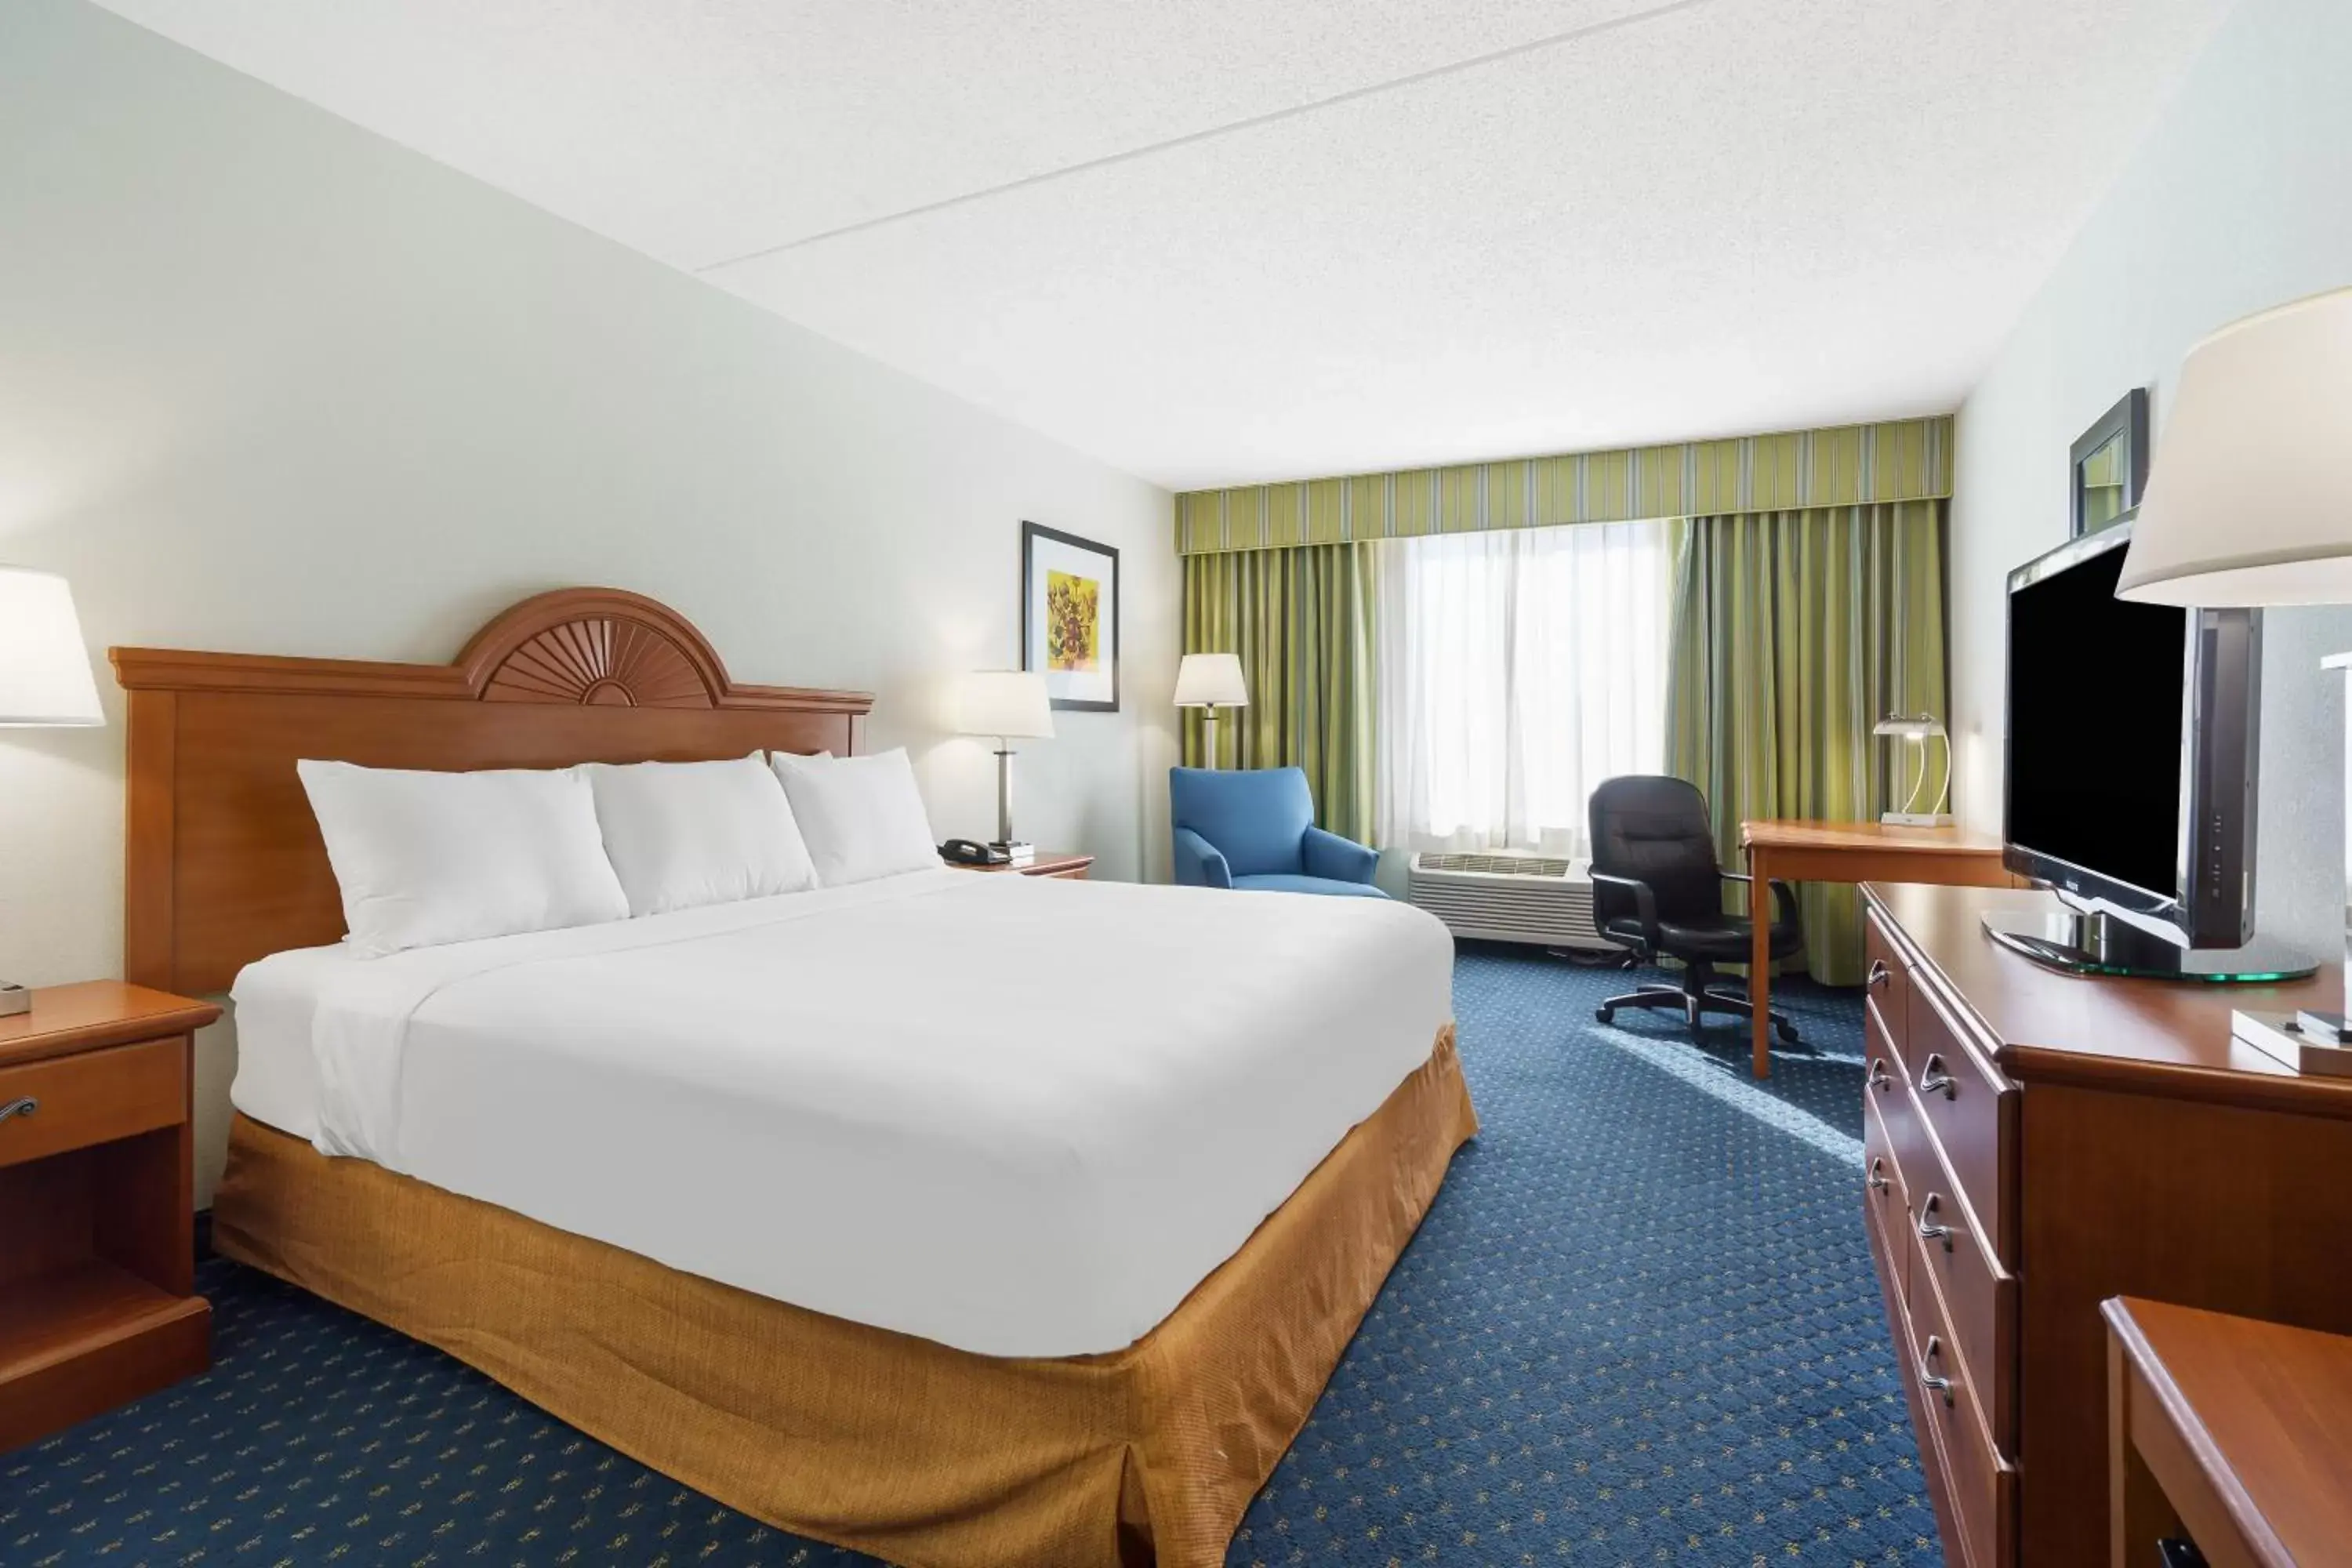 Deluxe King Room in Thousand Hills Resort Hotel